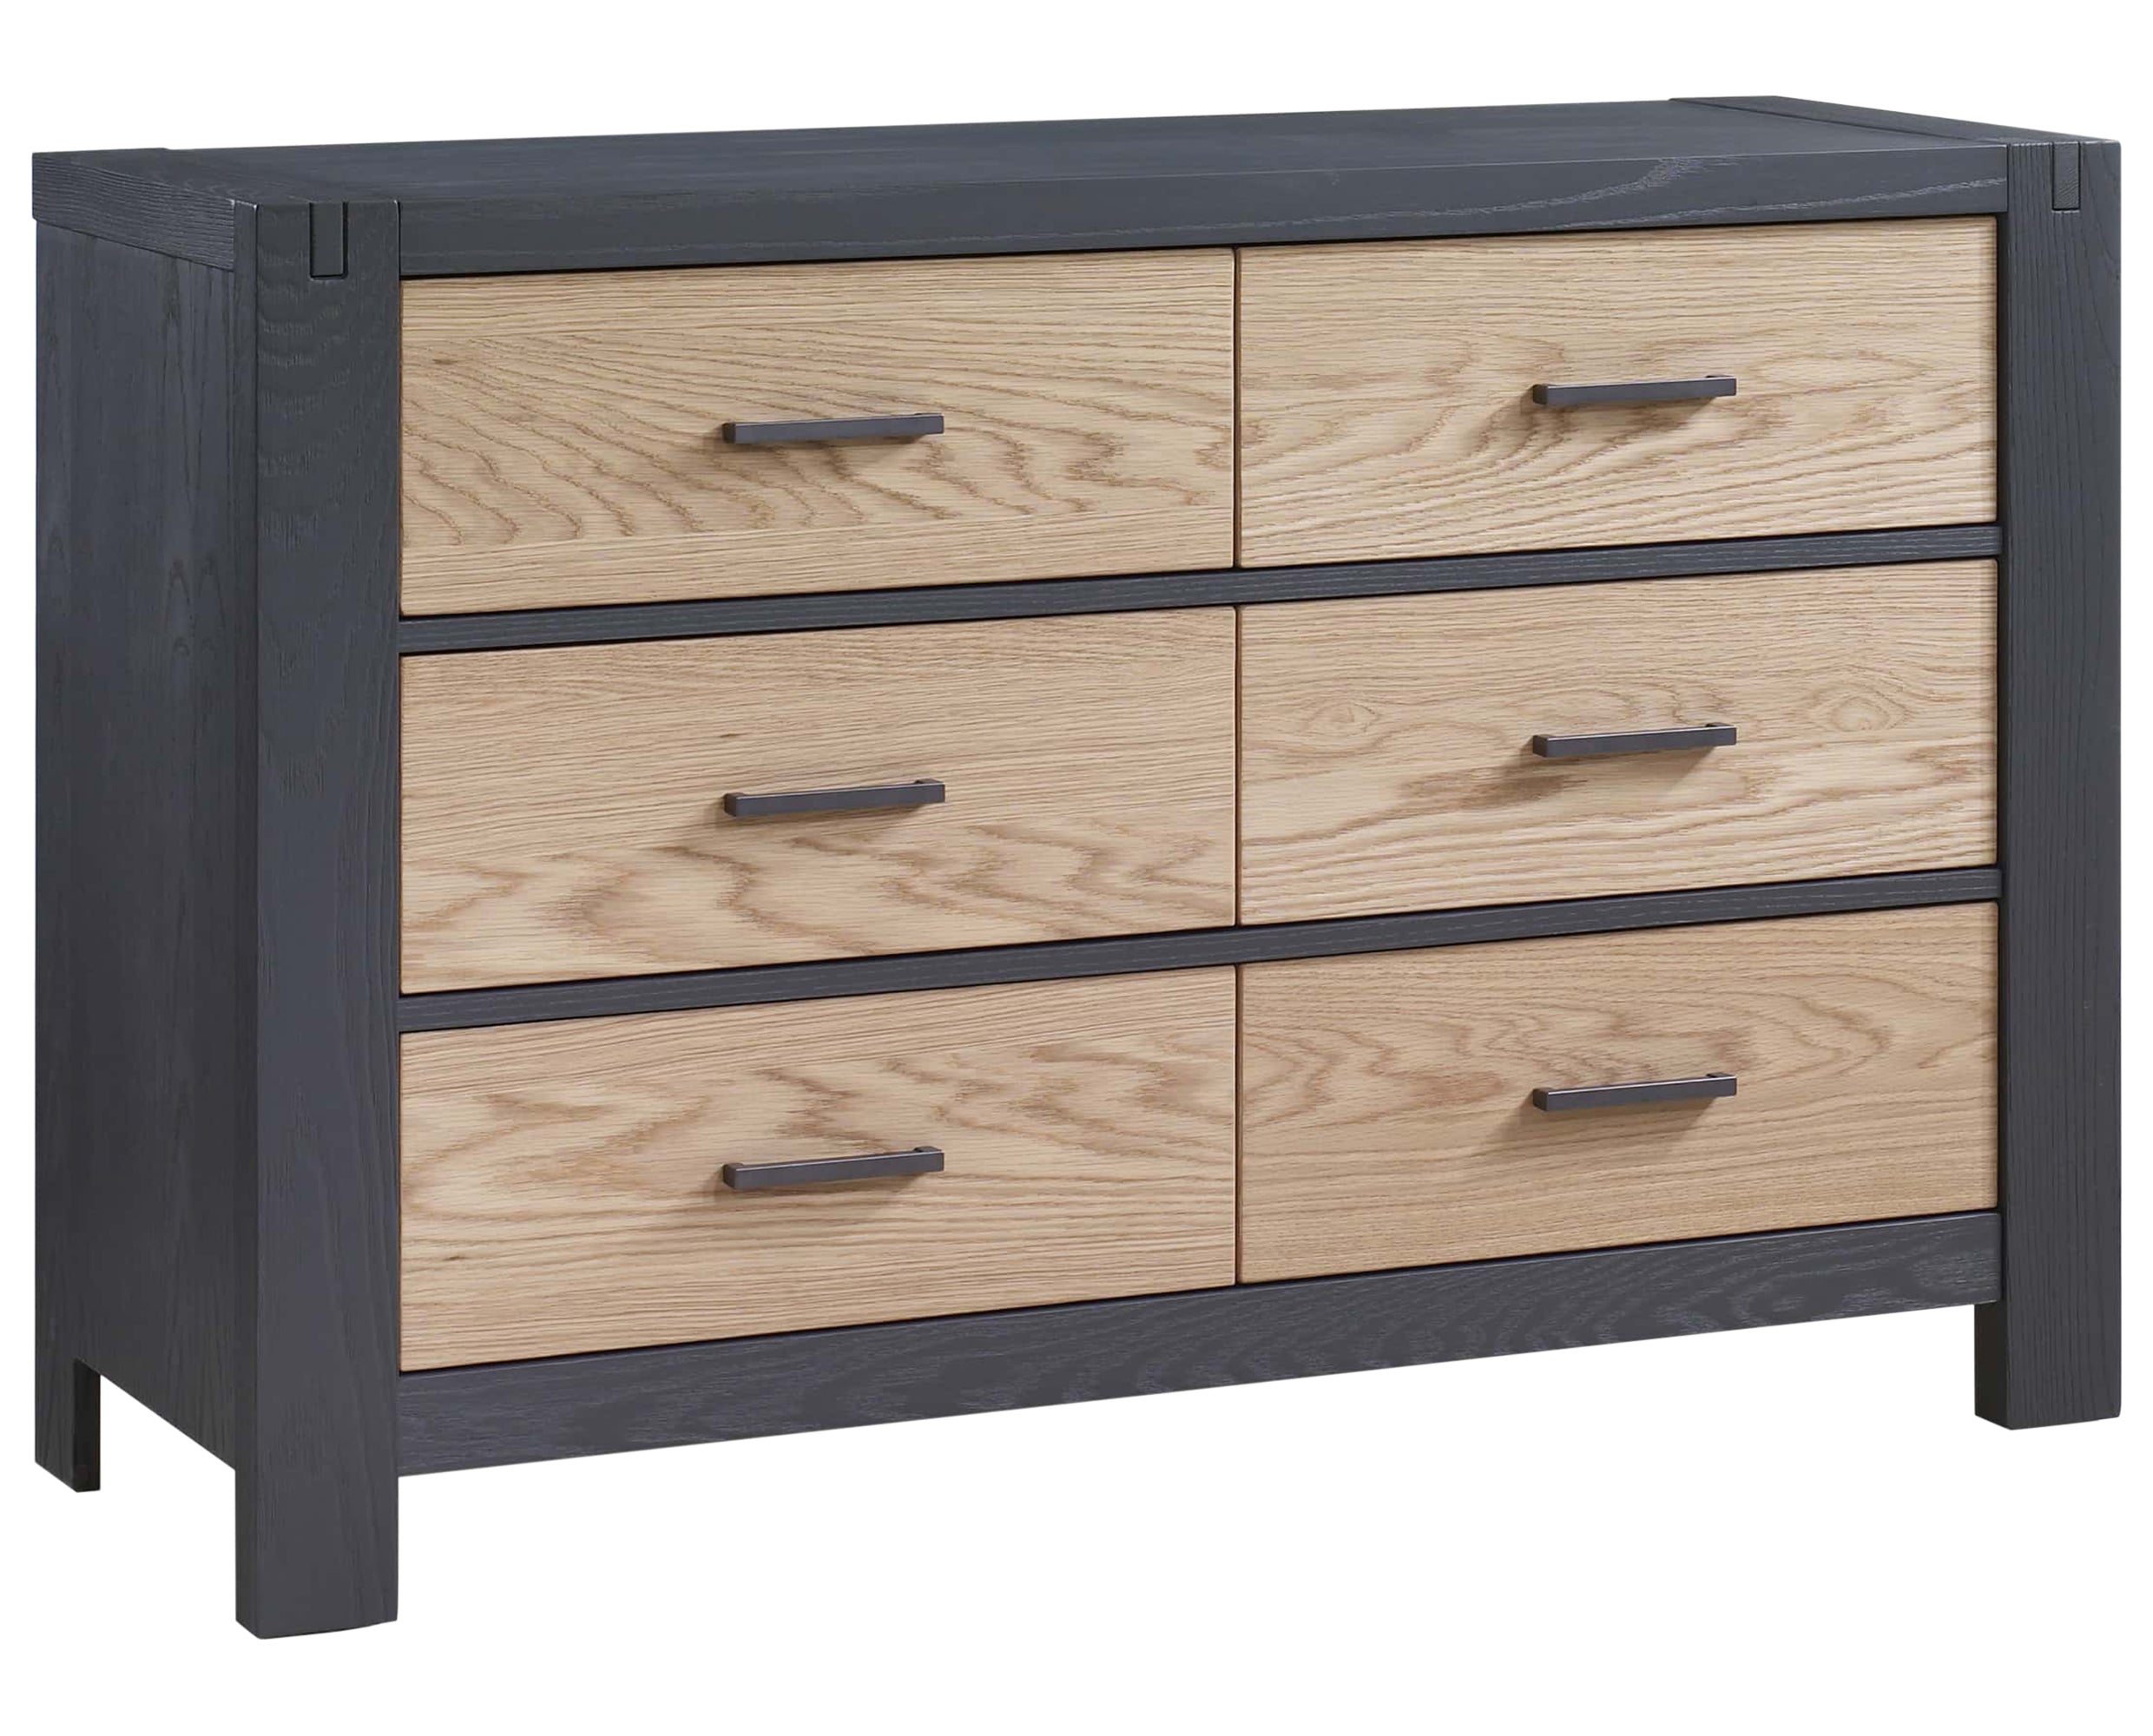 Graphite Oak with Natural Oak | Rustico Moderno Double Dresser | Valley Ridge Furniture